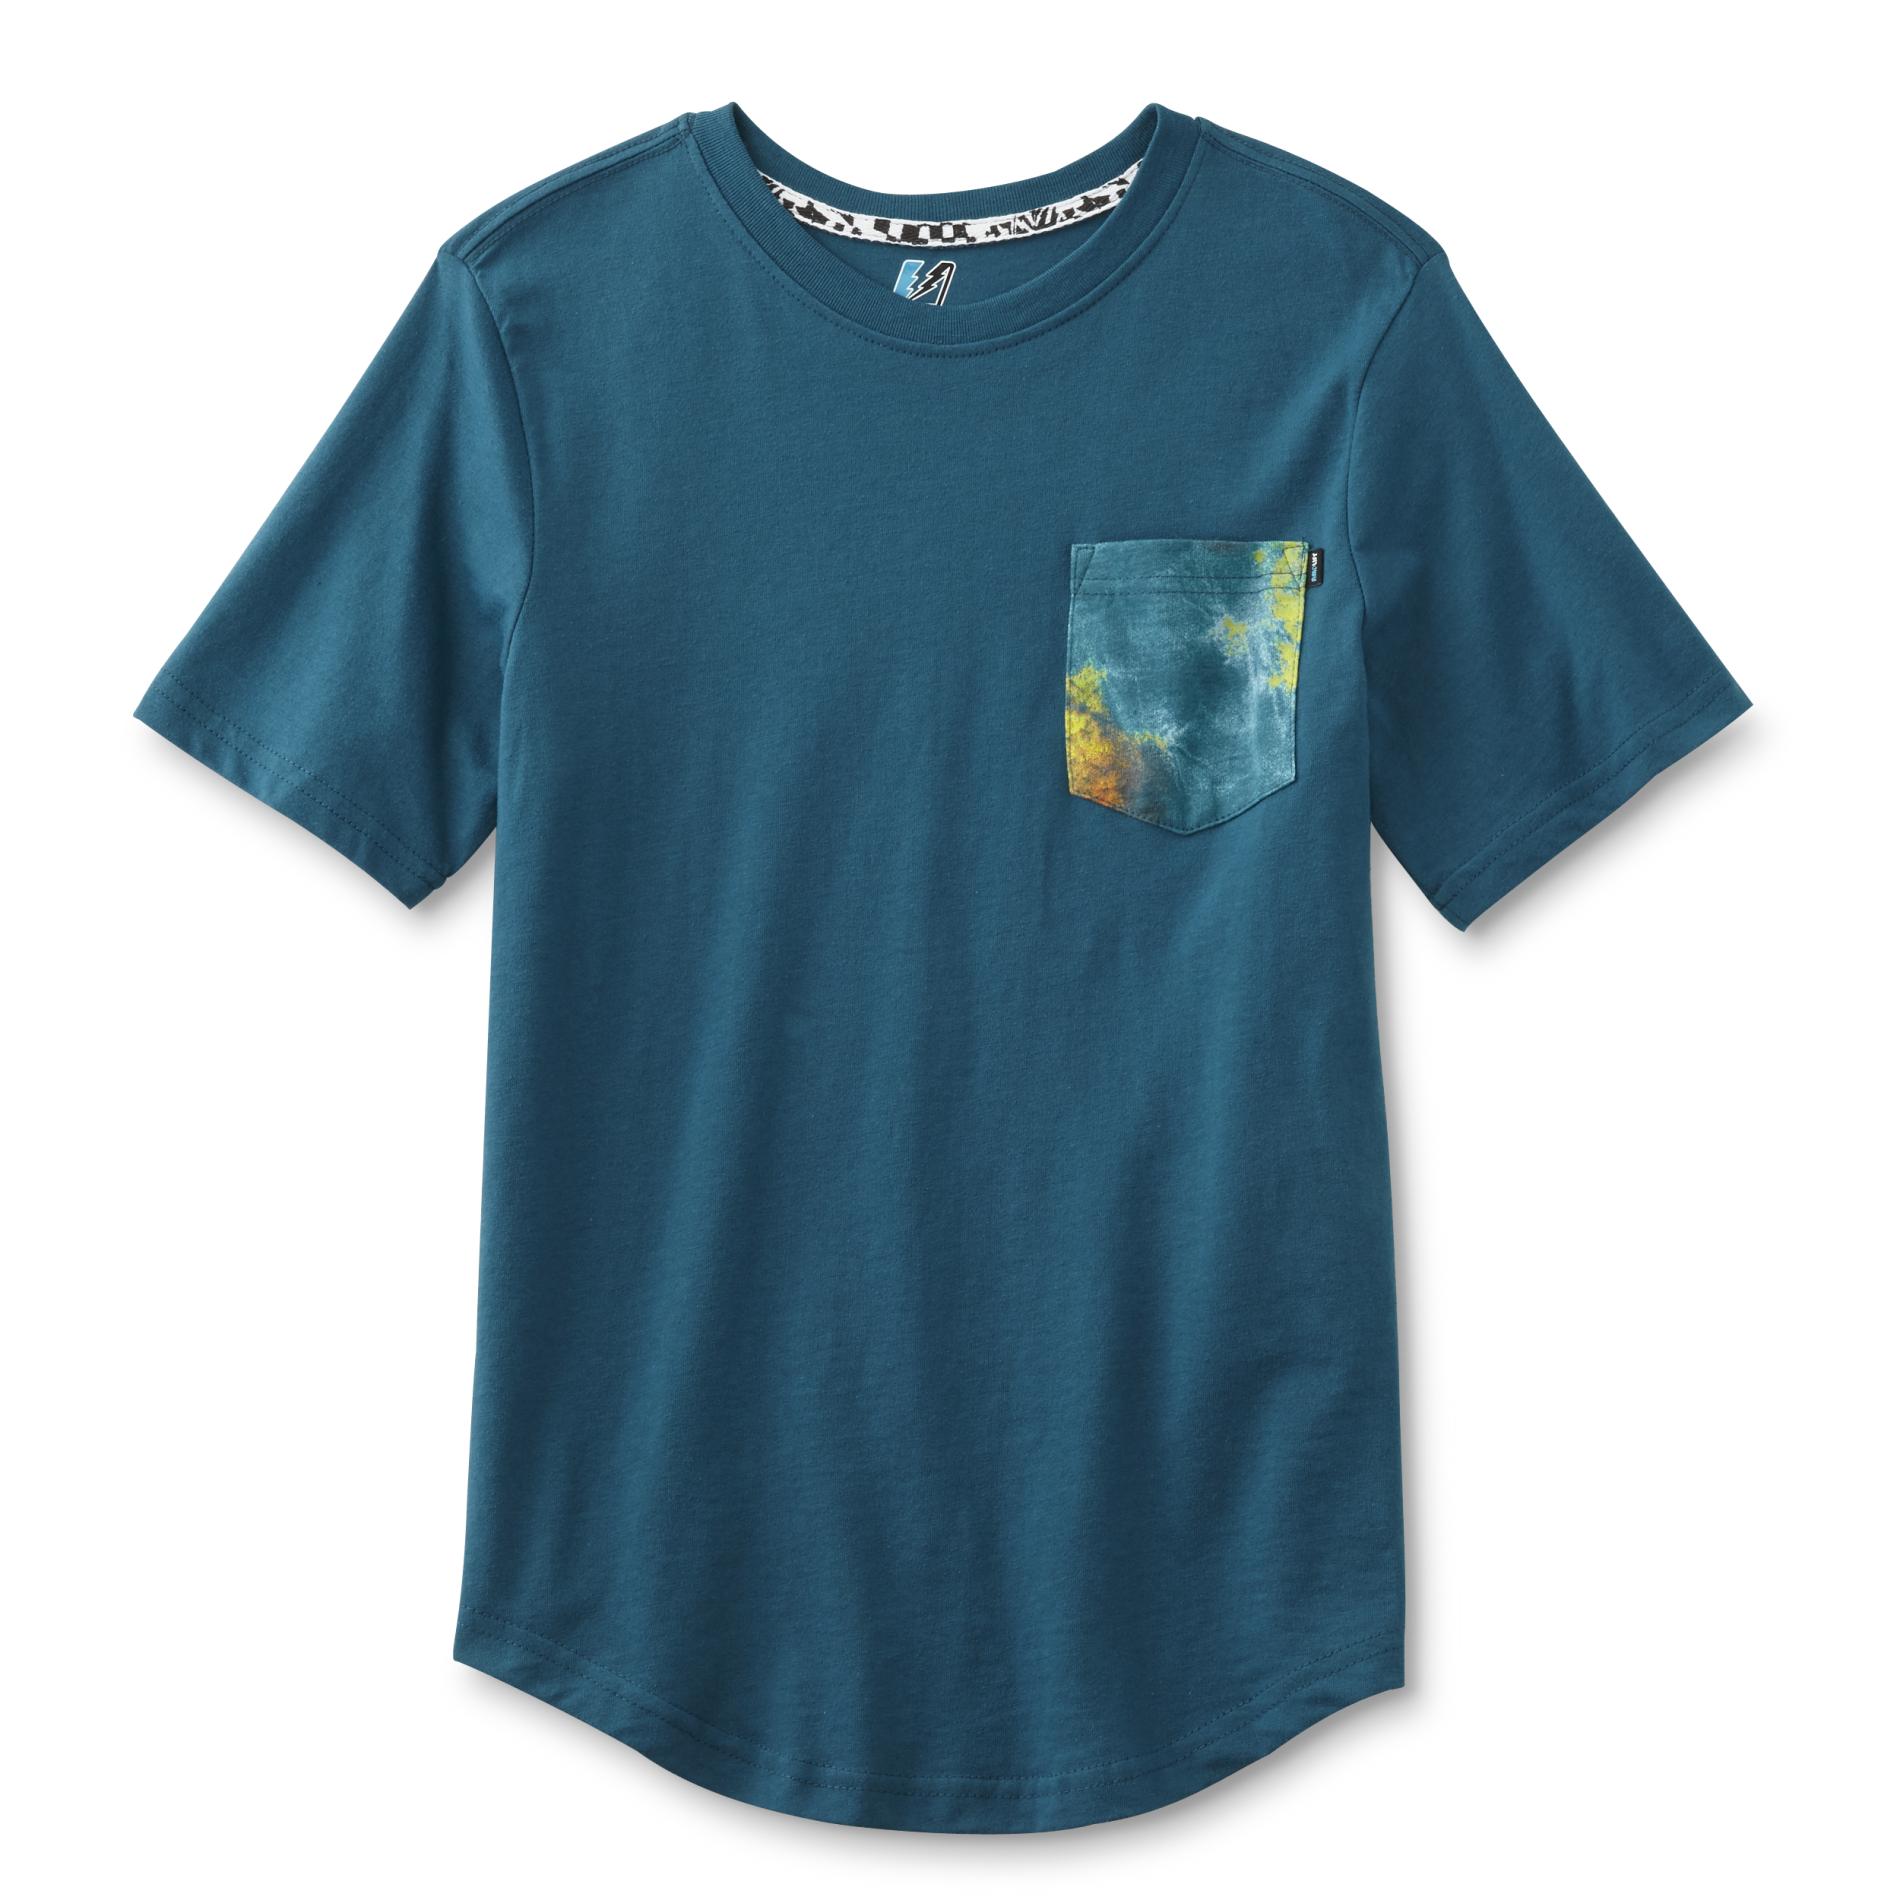 Amplify Boy"s Pocket T-Shirt - Abstract